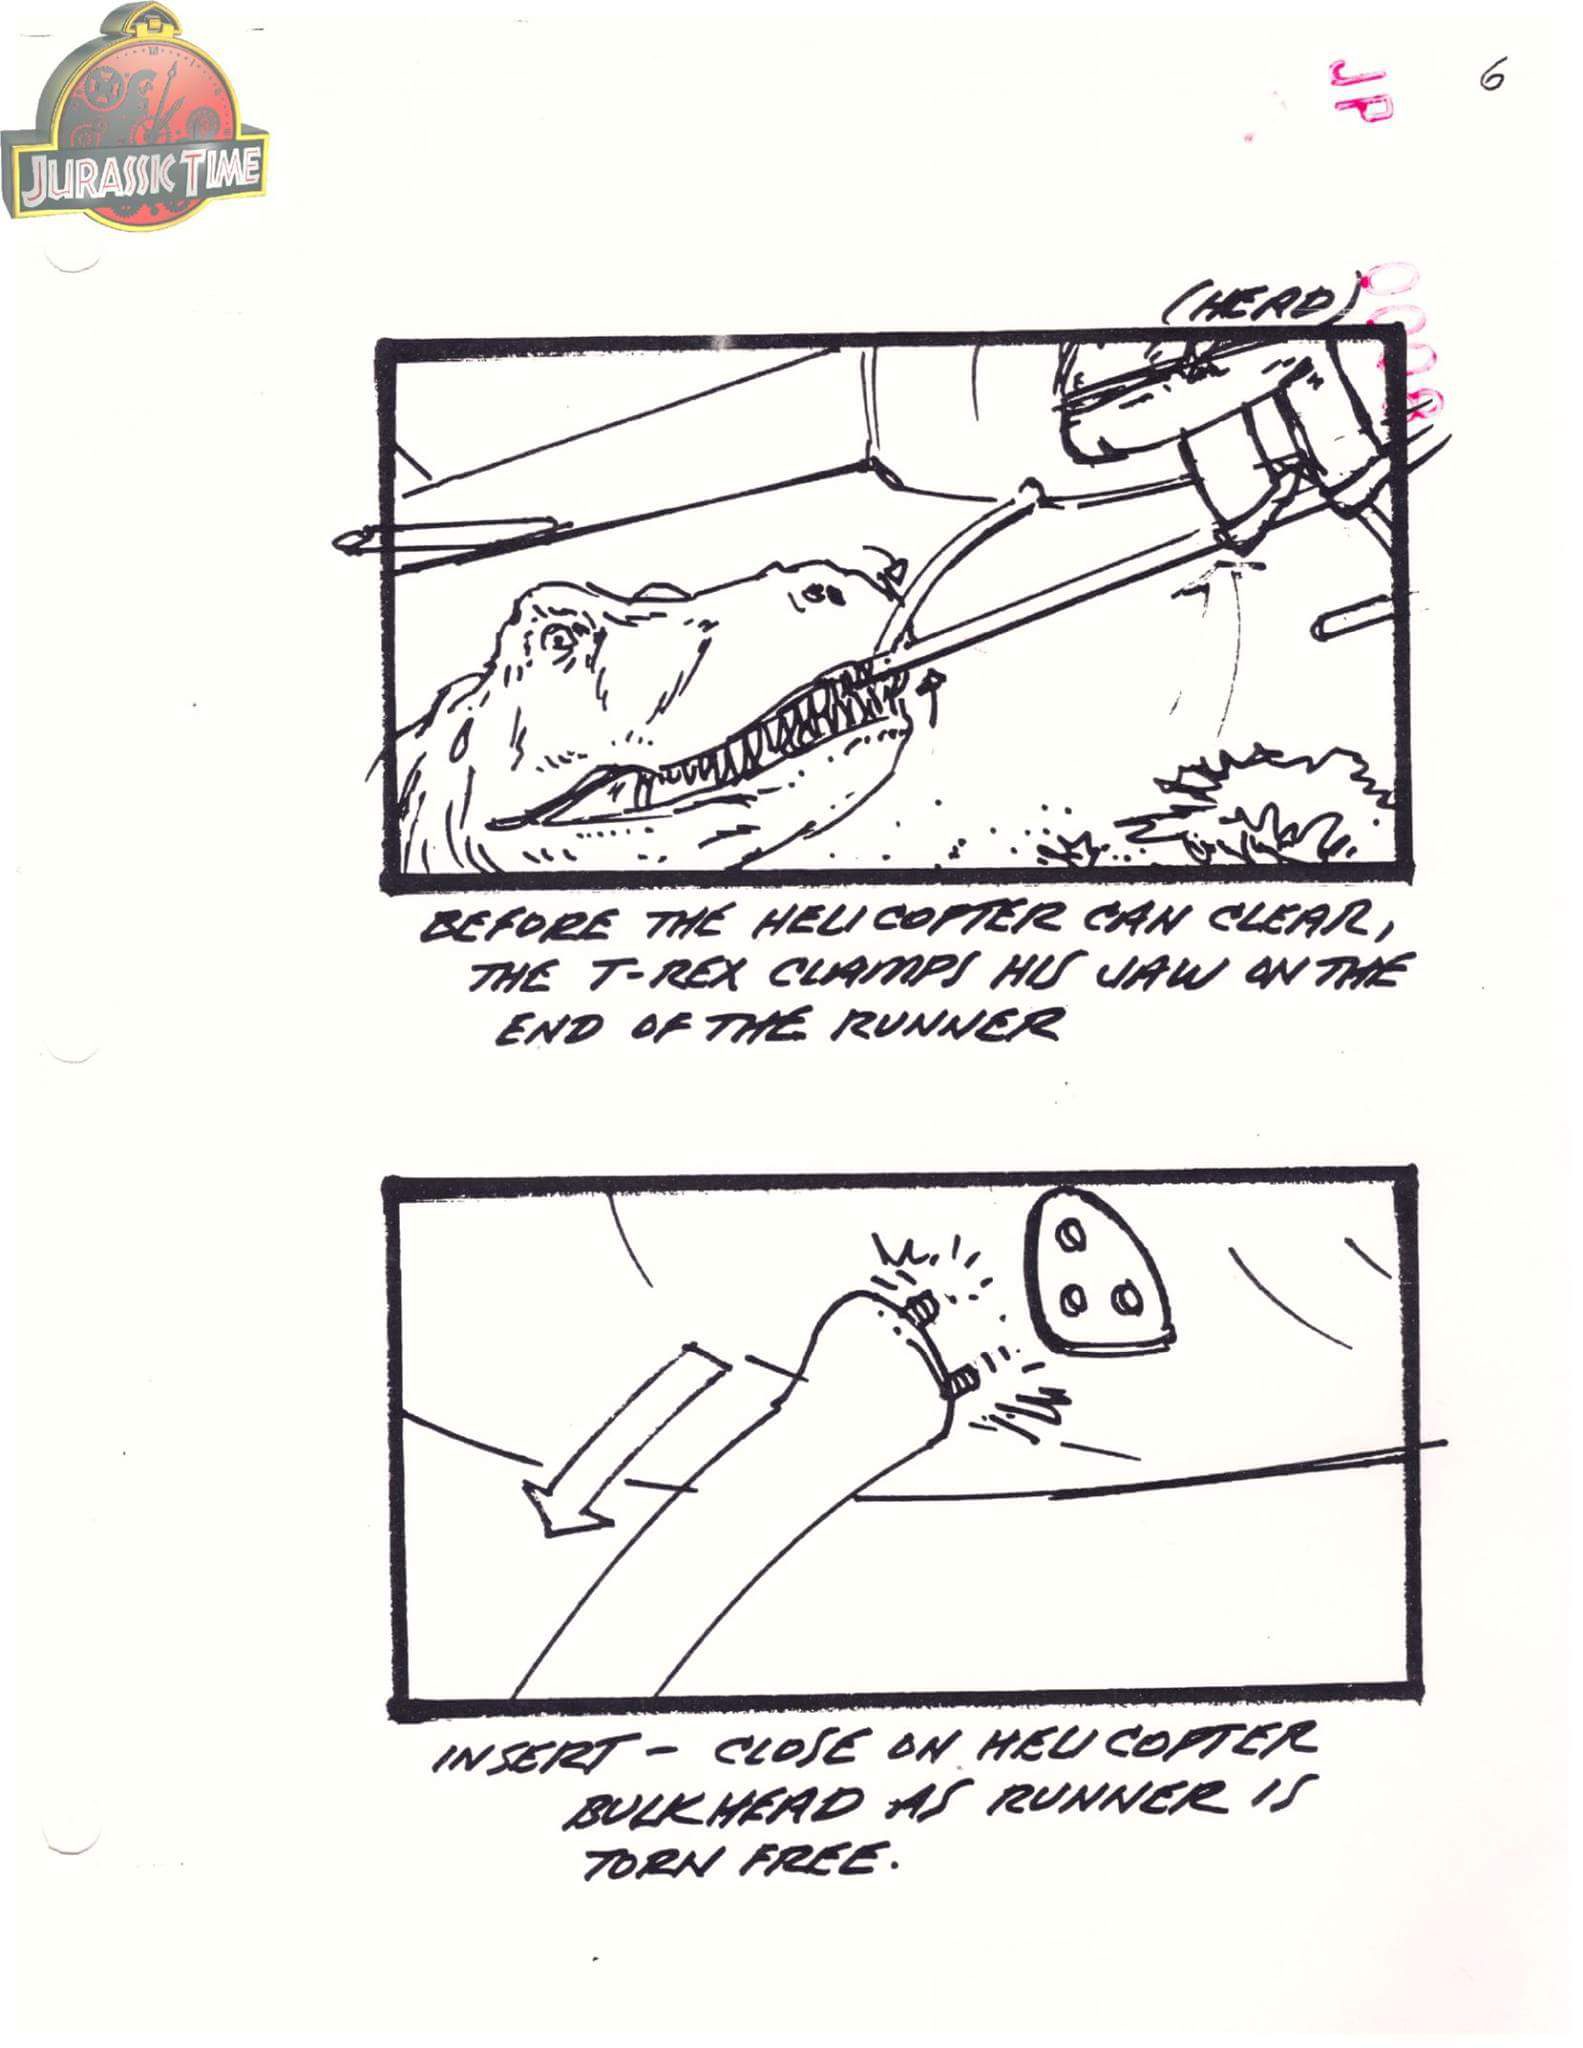 'Jurassic Park' (1993) Storyboard